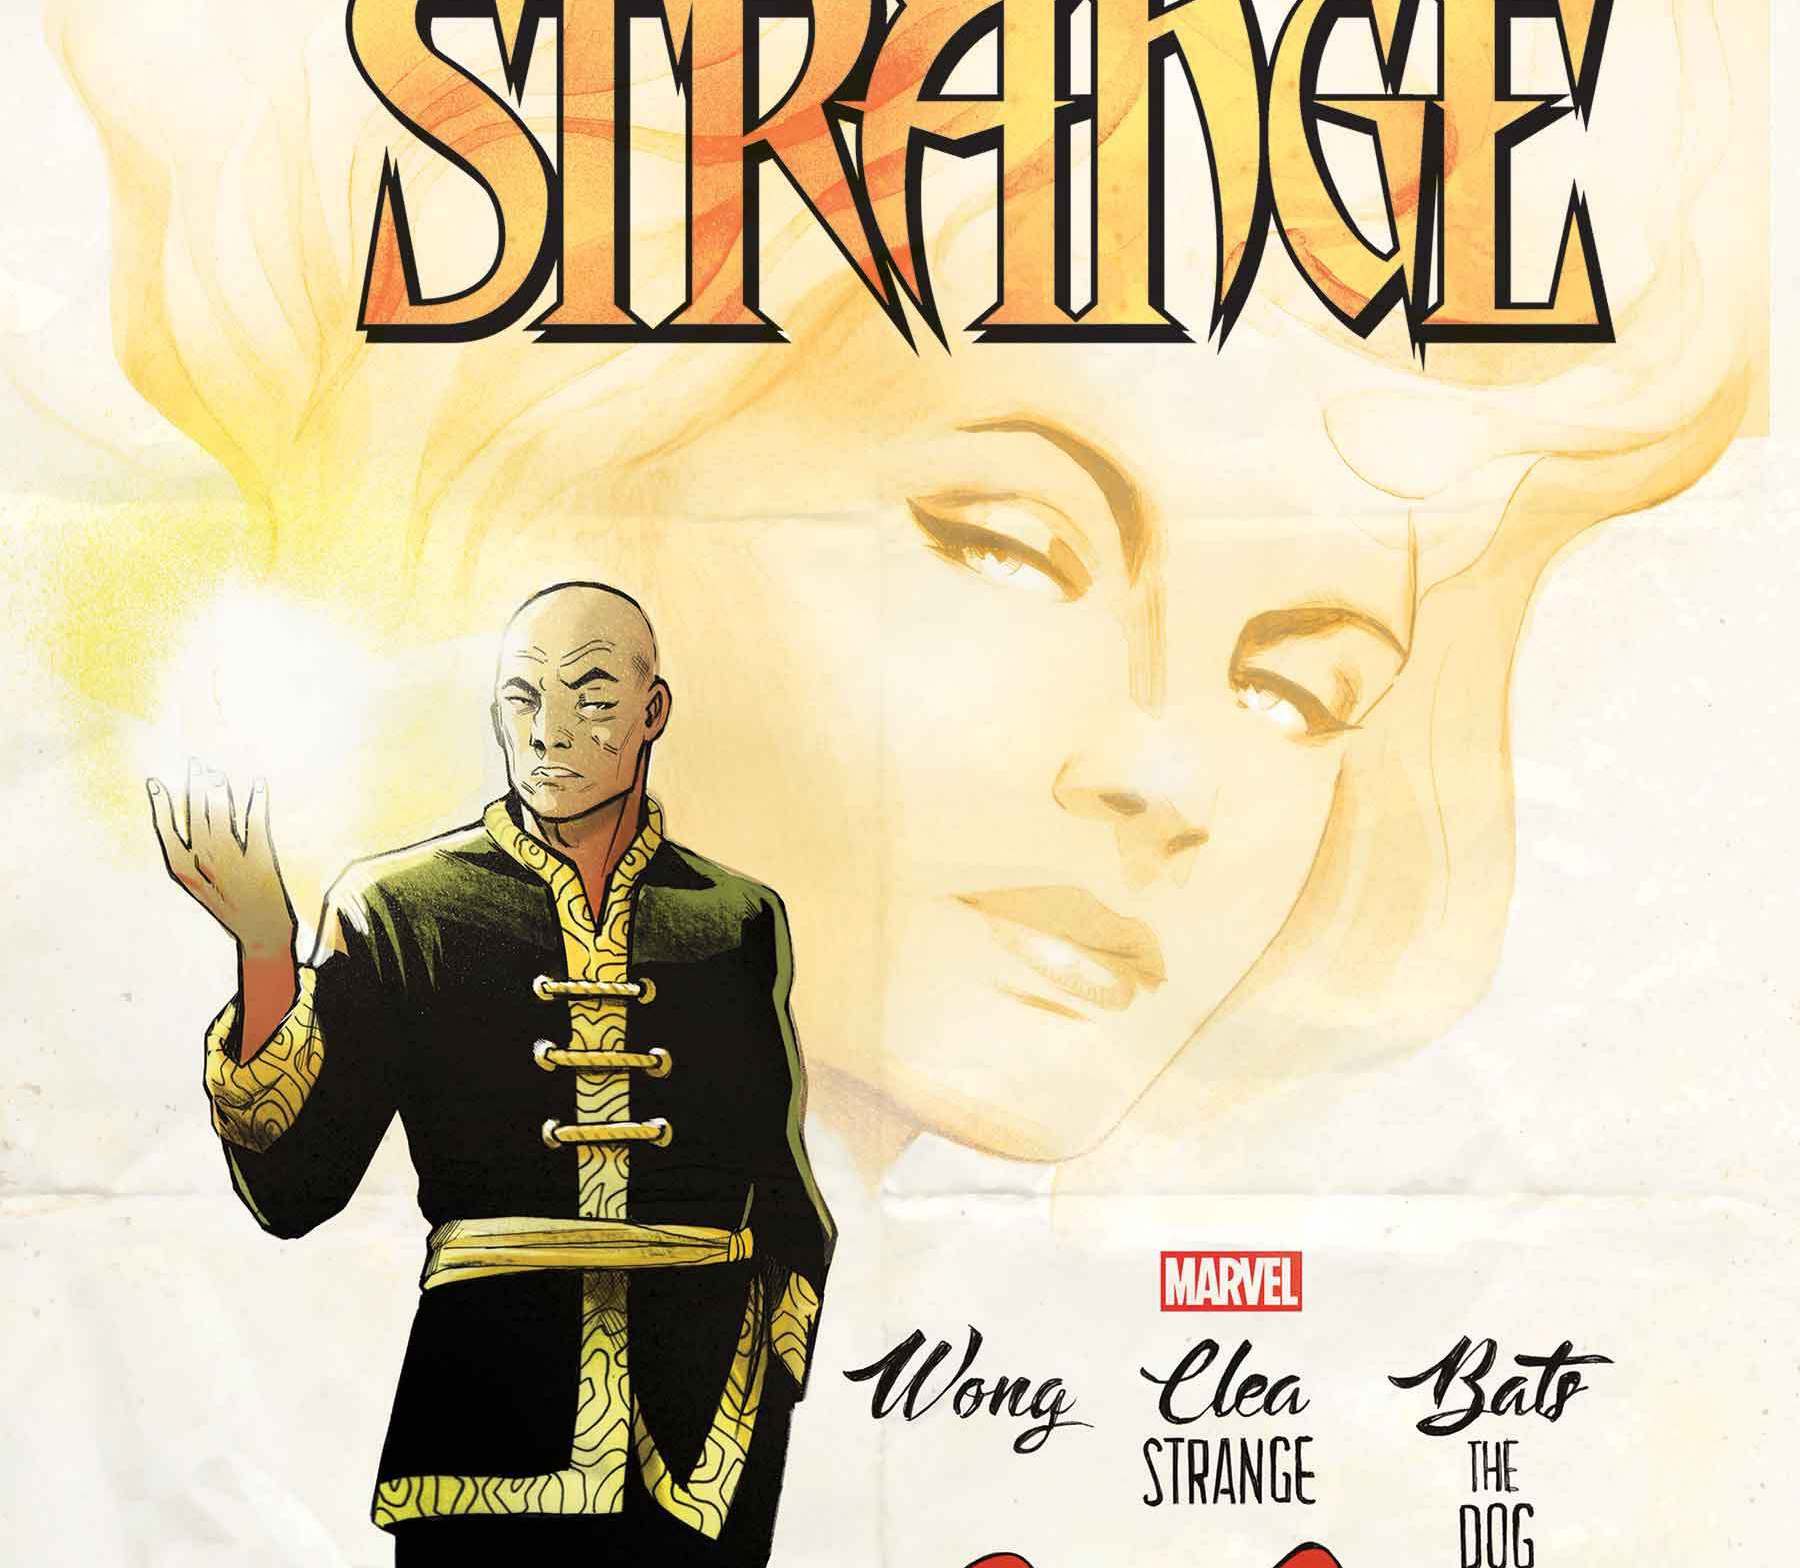 EXCLUSIVE Marvel First Look: Strange #6